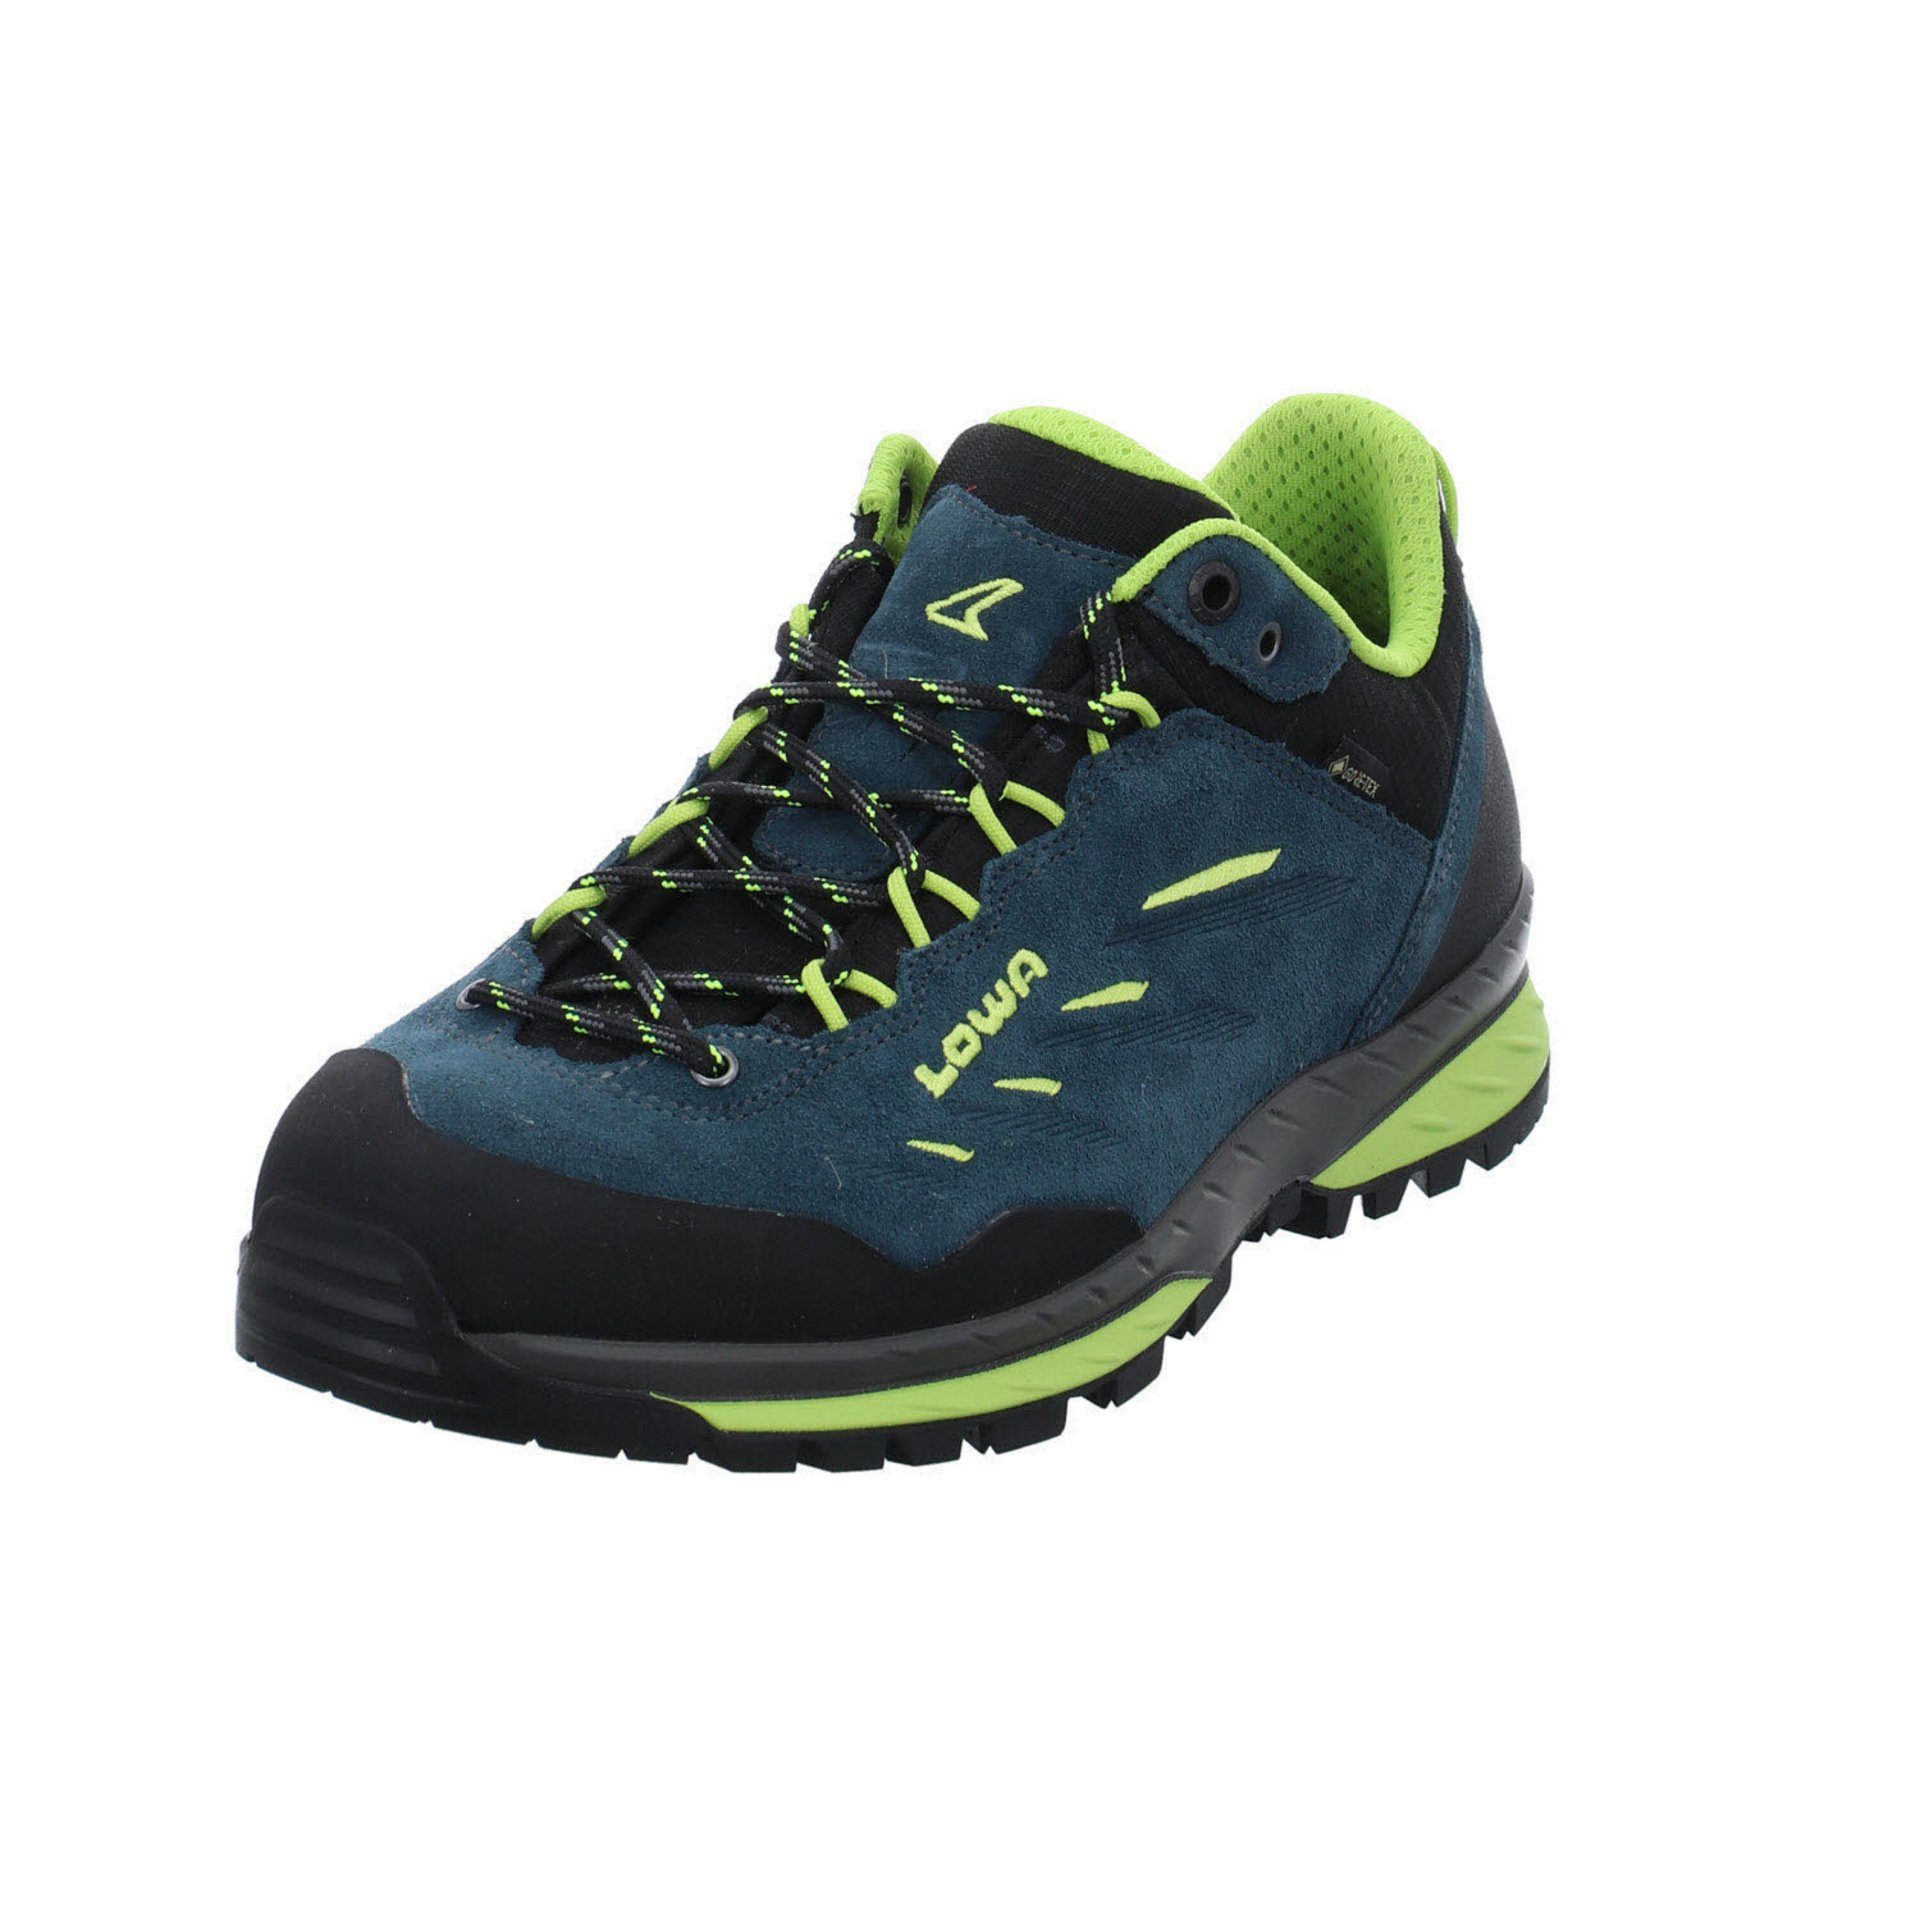 Lowa »Herren Outdoor Schuhe Delgado GTX Lo Outdoorschuh« Outdoorschuh  Leder-/Textilkombination online kaufen | OTTO